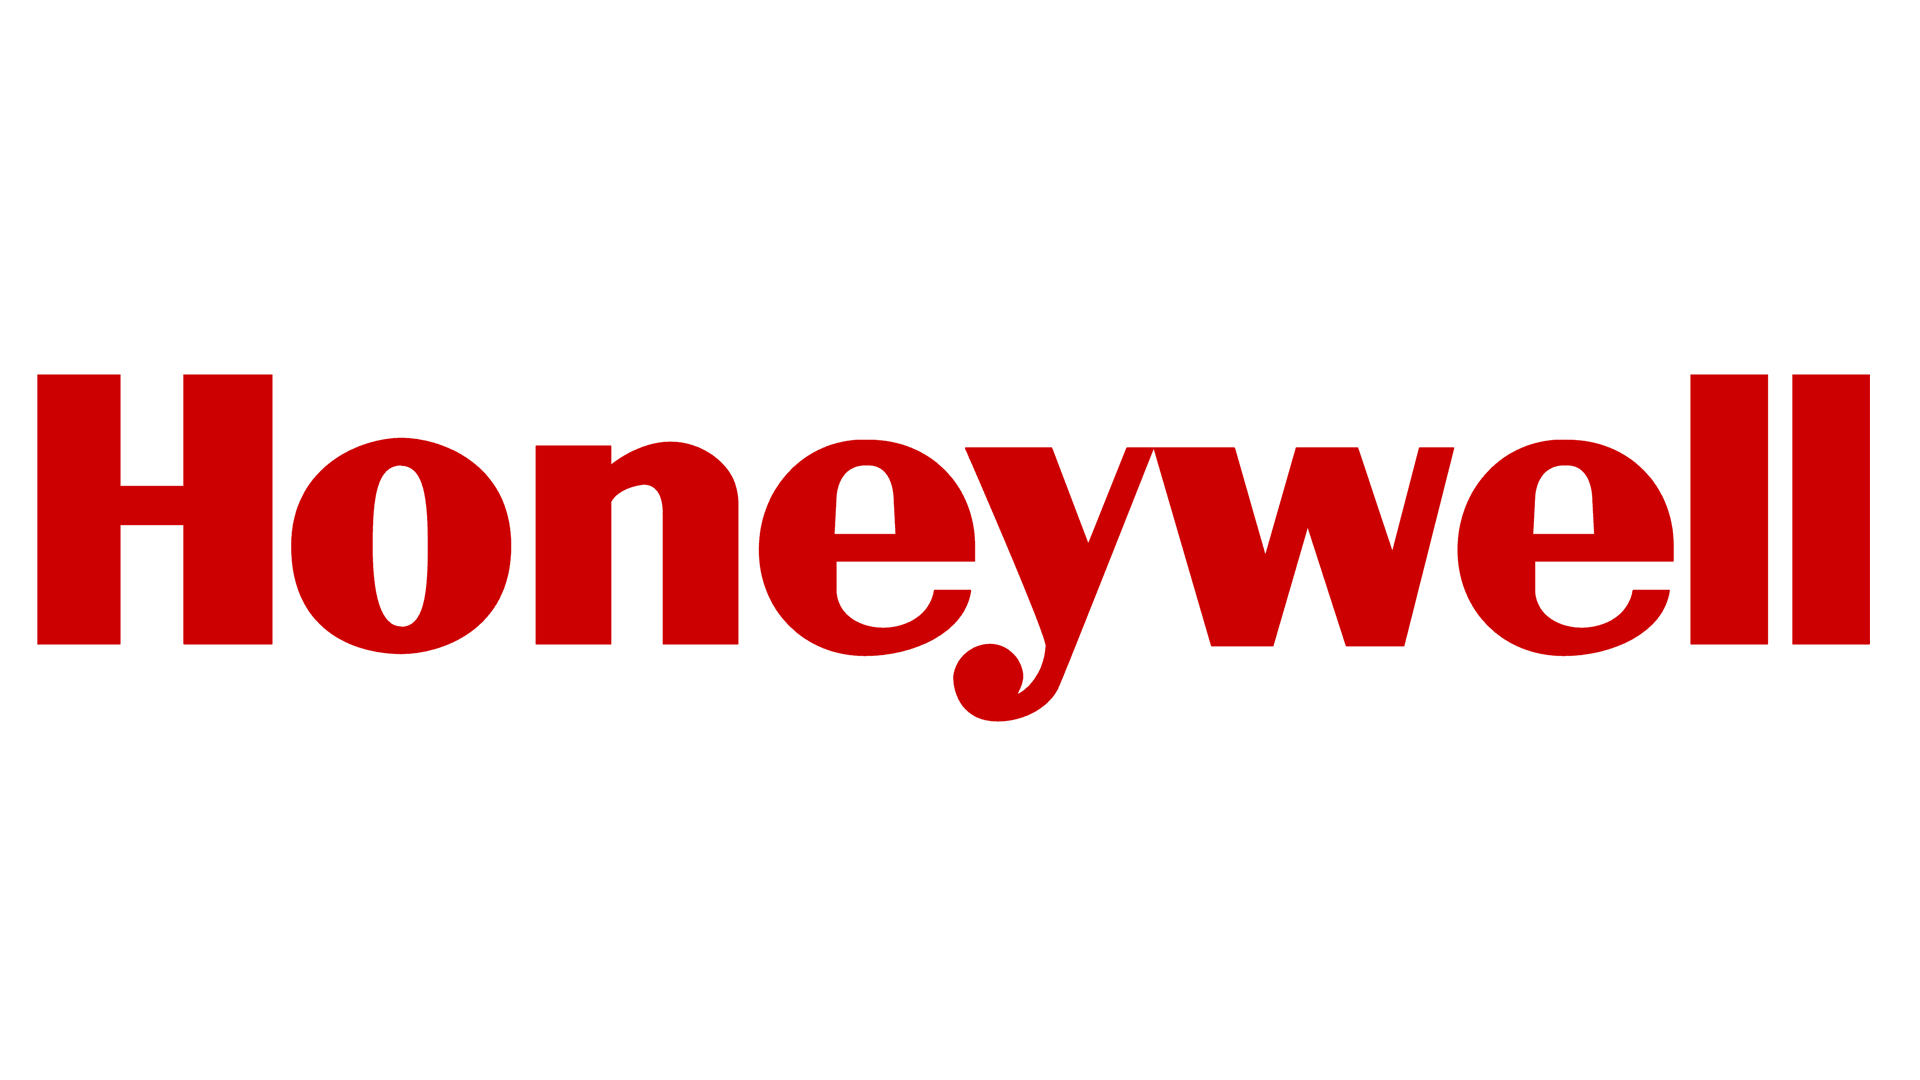 Honeywell Energy Solutions Group